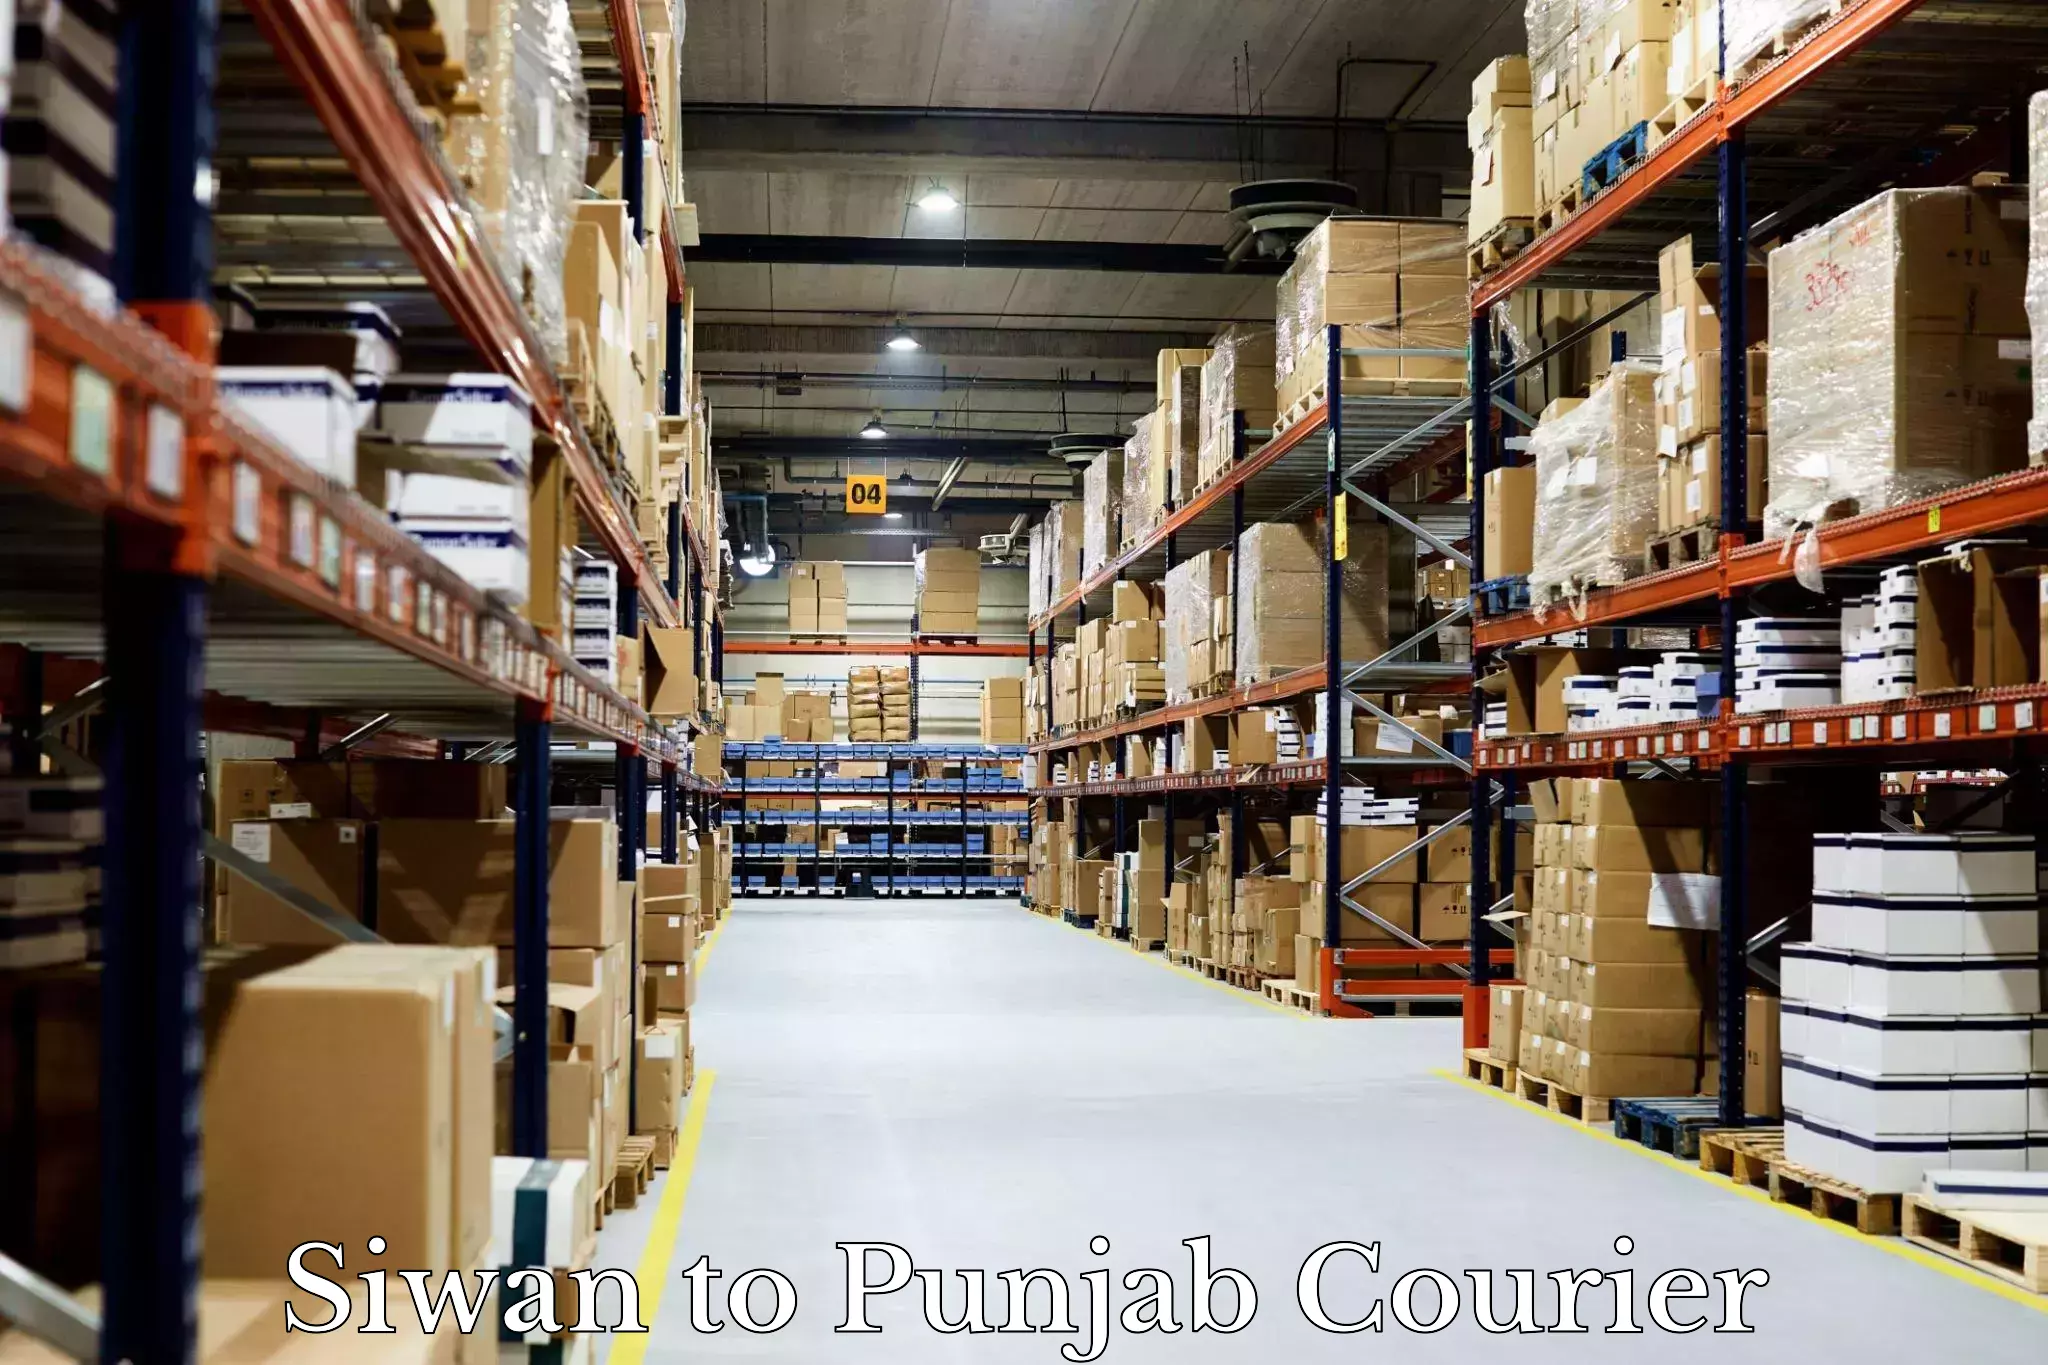 Customer-centric shipping Siwan to Punjab